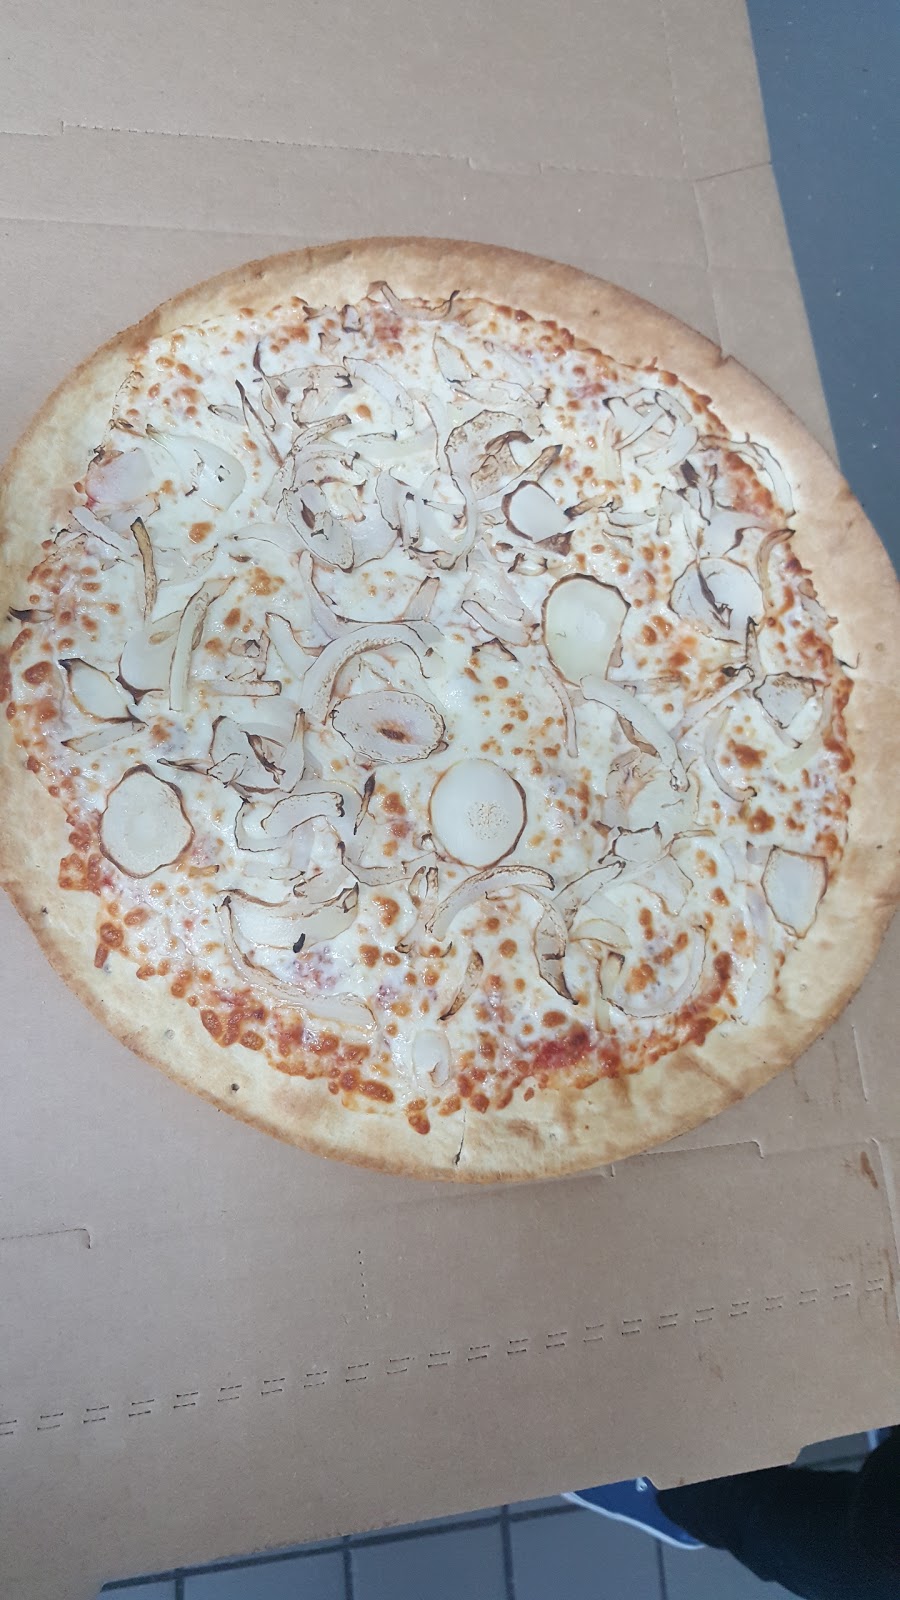 Little Caesars Pizza | 2200 Roswell Rd, Marietta, GA 30062, USA | Phone: (770) 971-5210